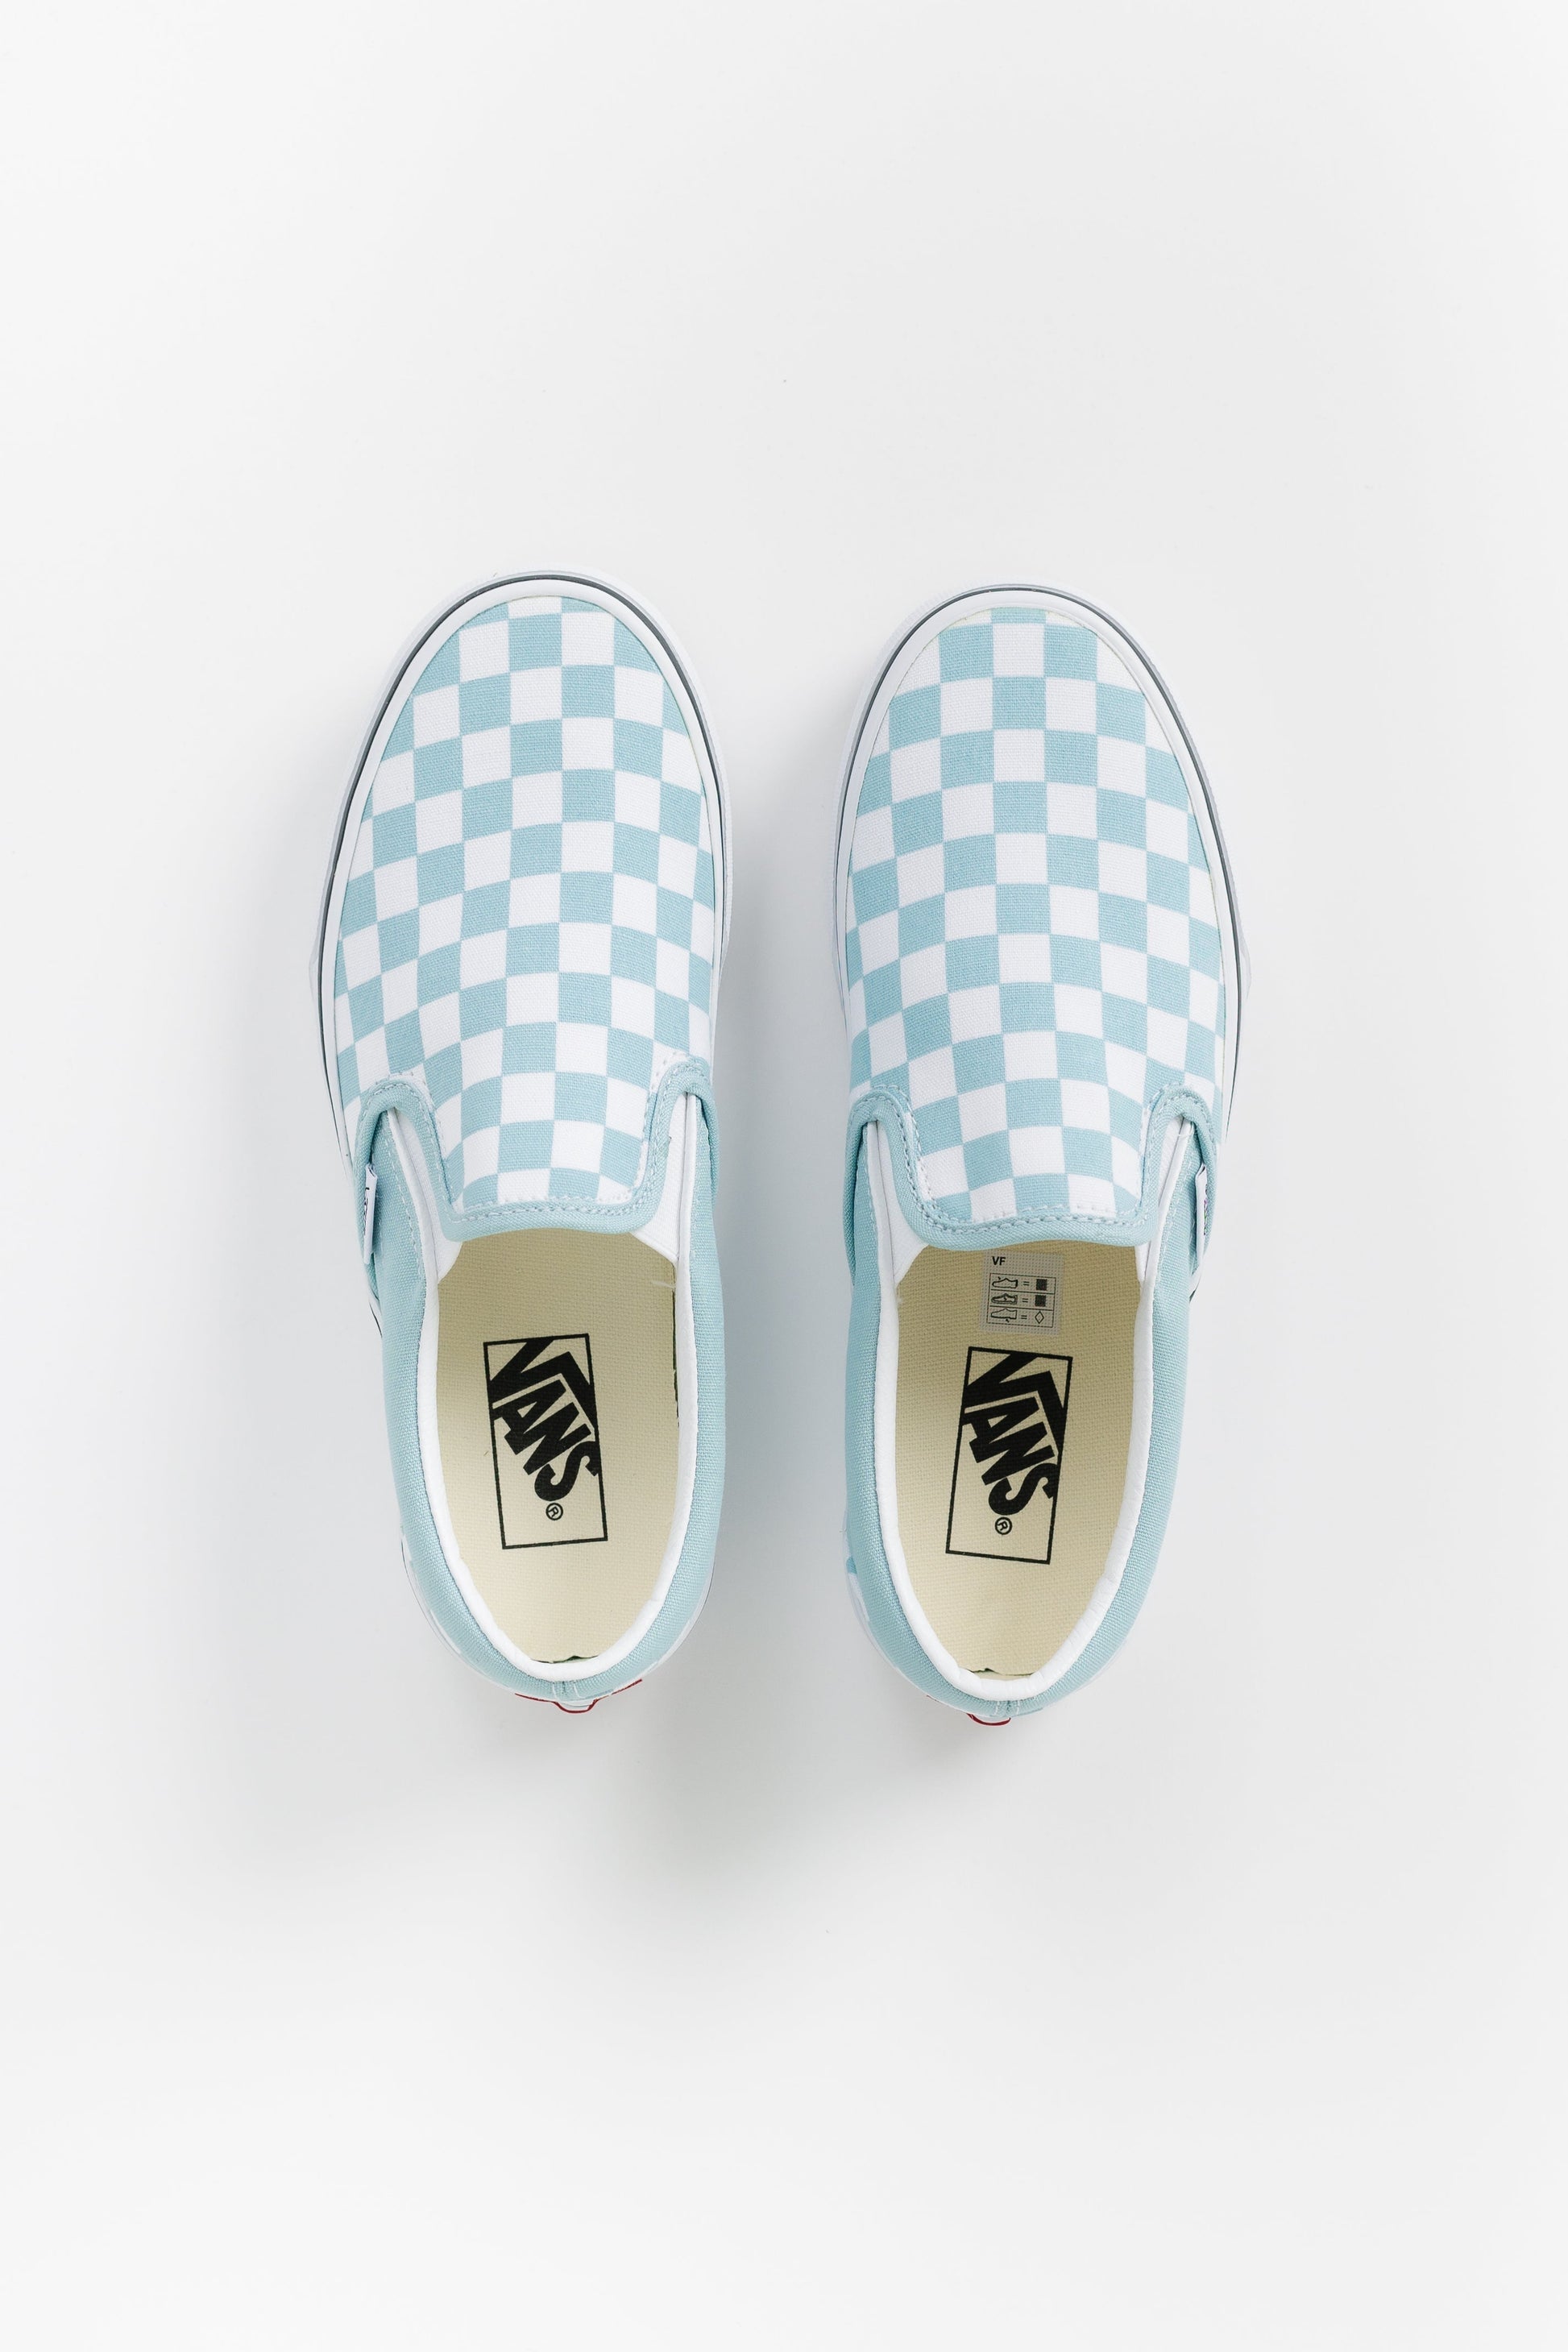 Vans Slip On classic checkerboard sneakers in blue